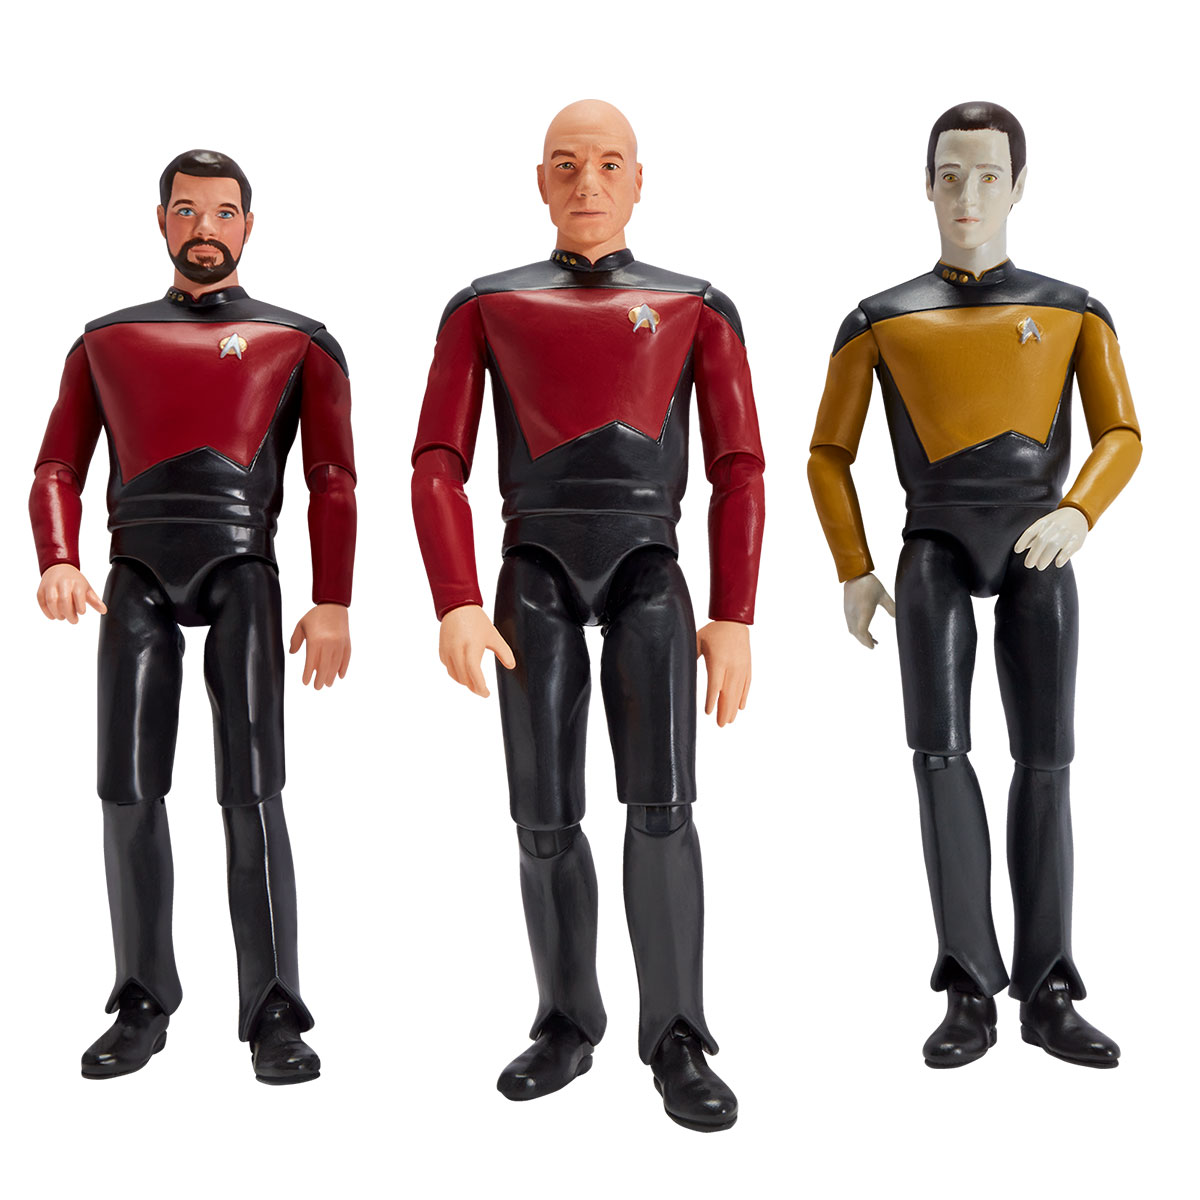 Star Trek: The Next Generation: Commander William Riker, Captain Jean-Luc Picard and Lt. Commander Data